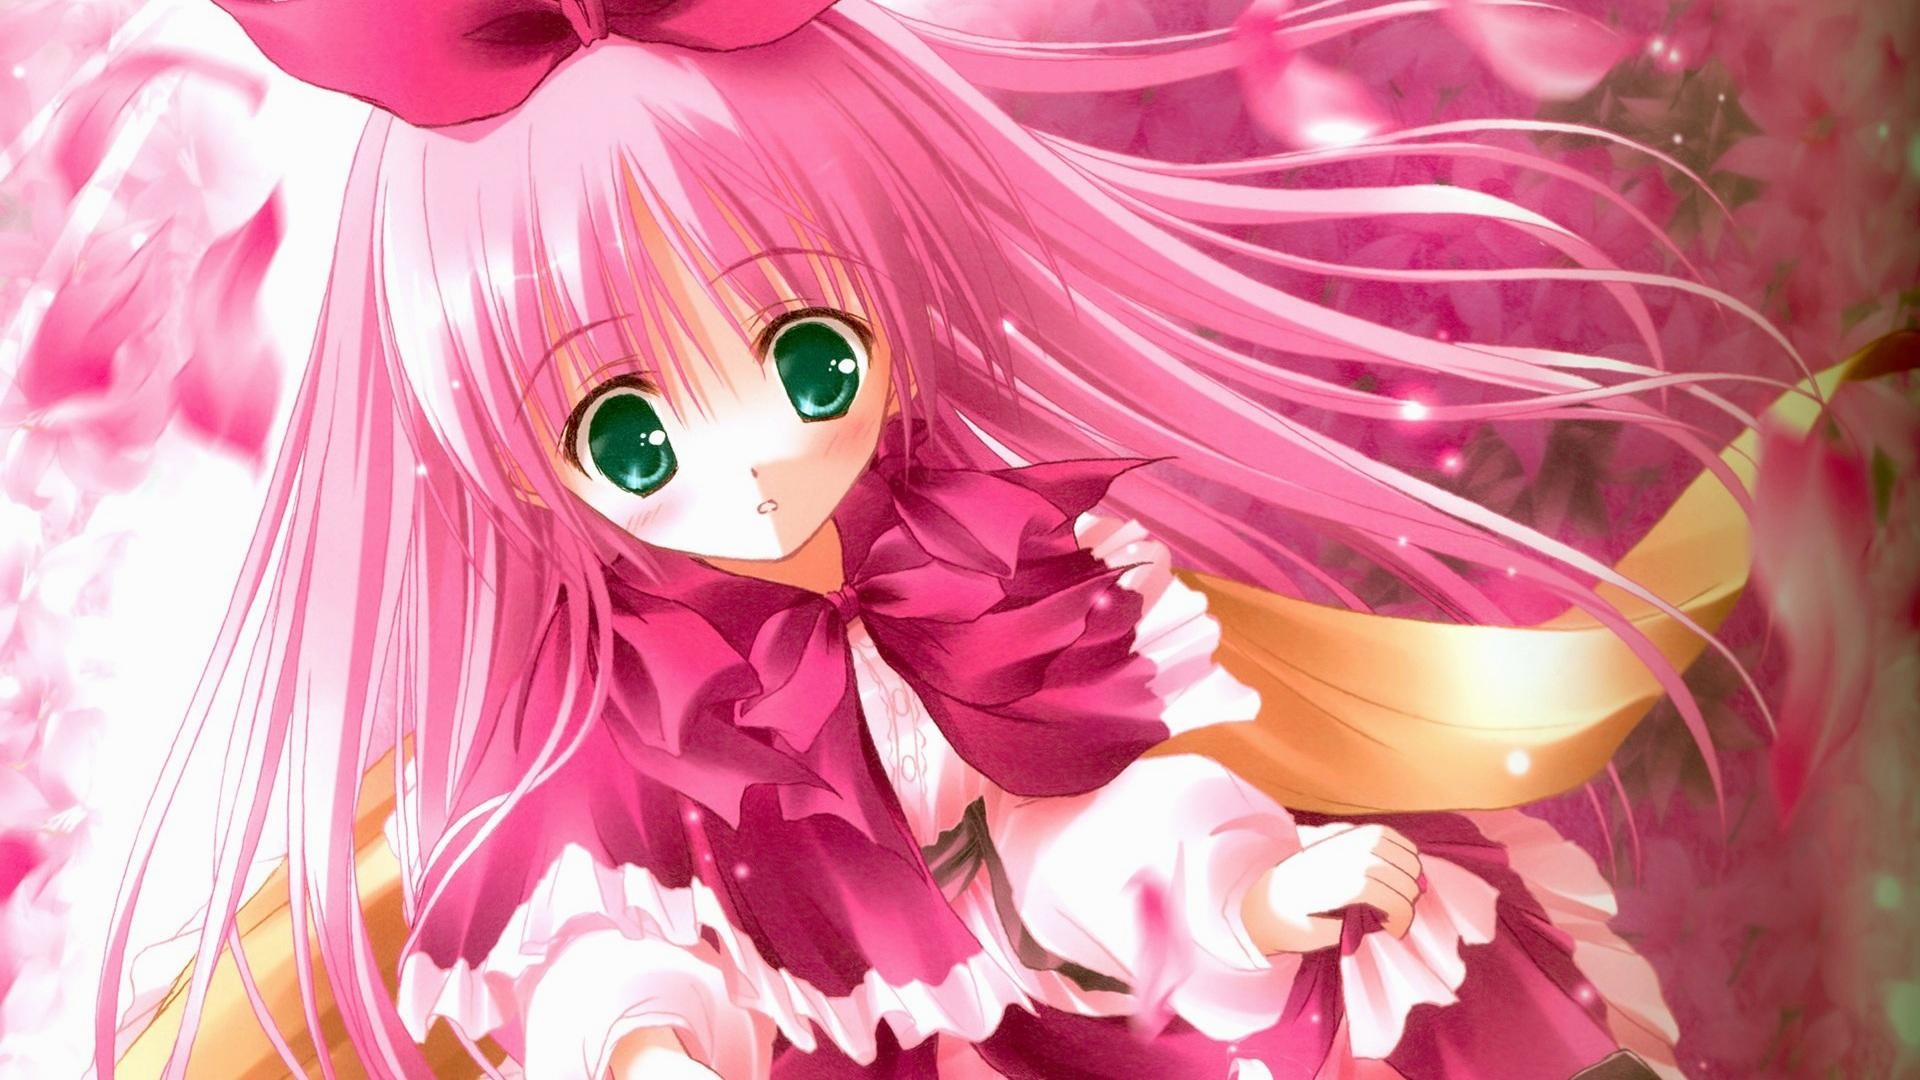 1920x1080 Cute-pink-hair-anime-girl-wallpapers-